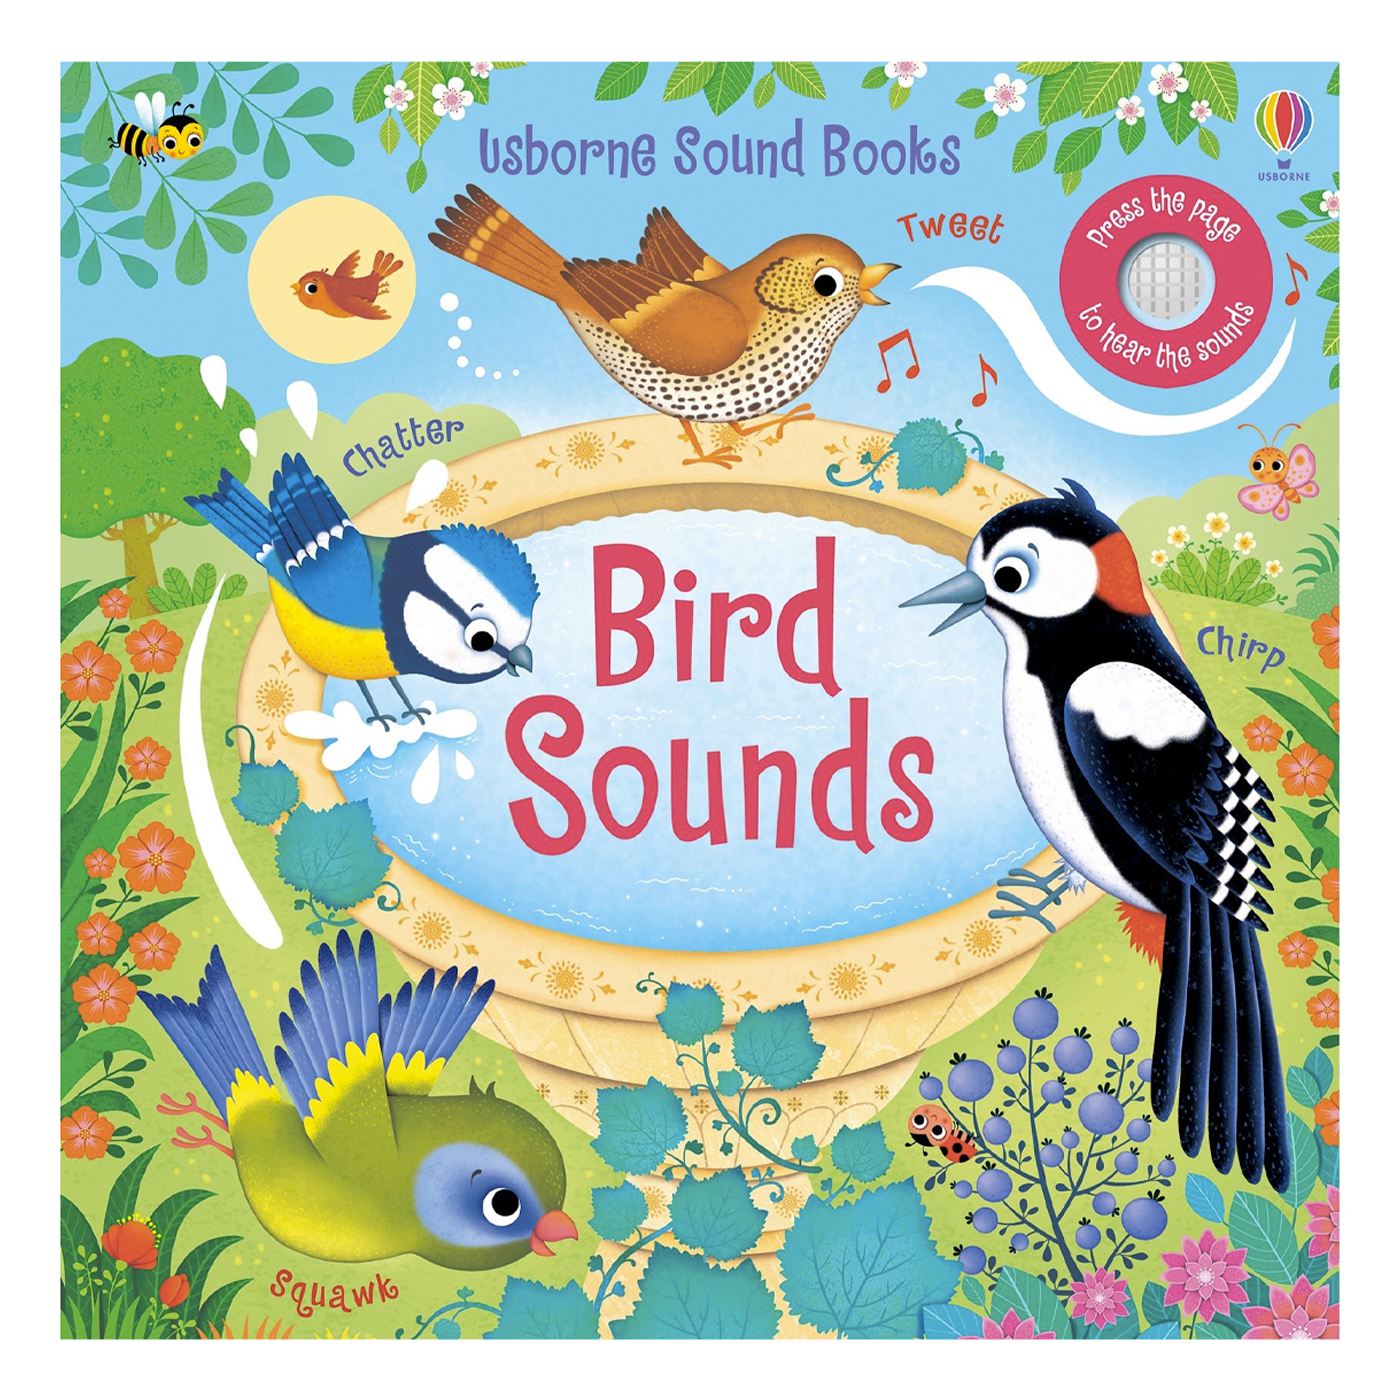  Bird Sounds Sounds Books